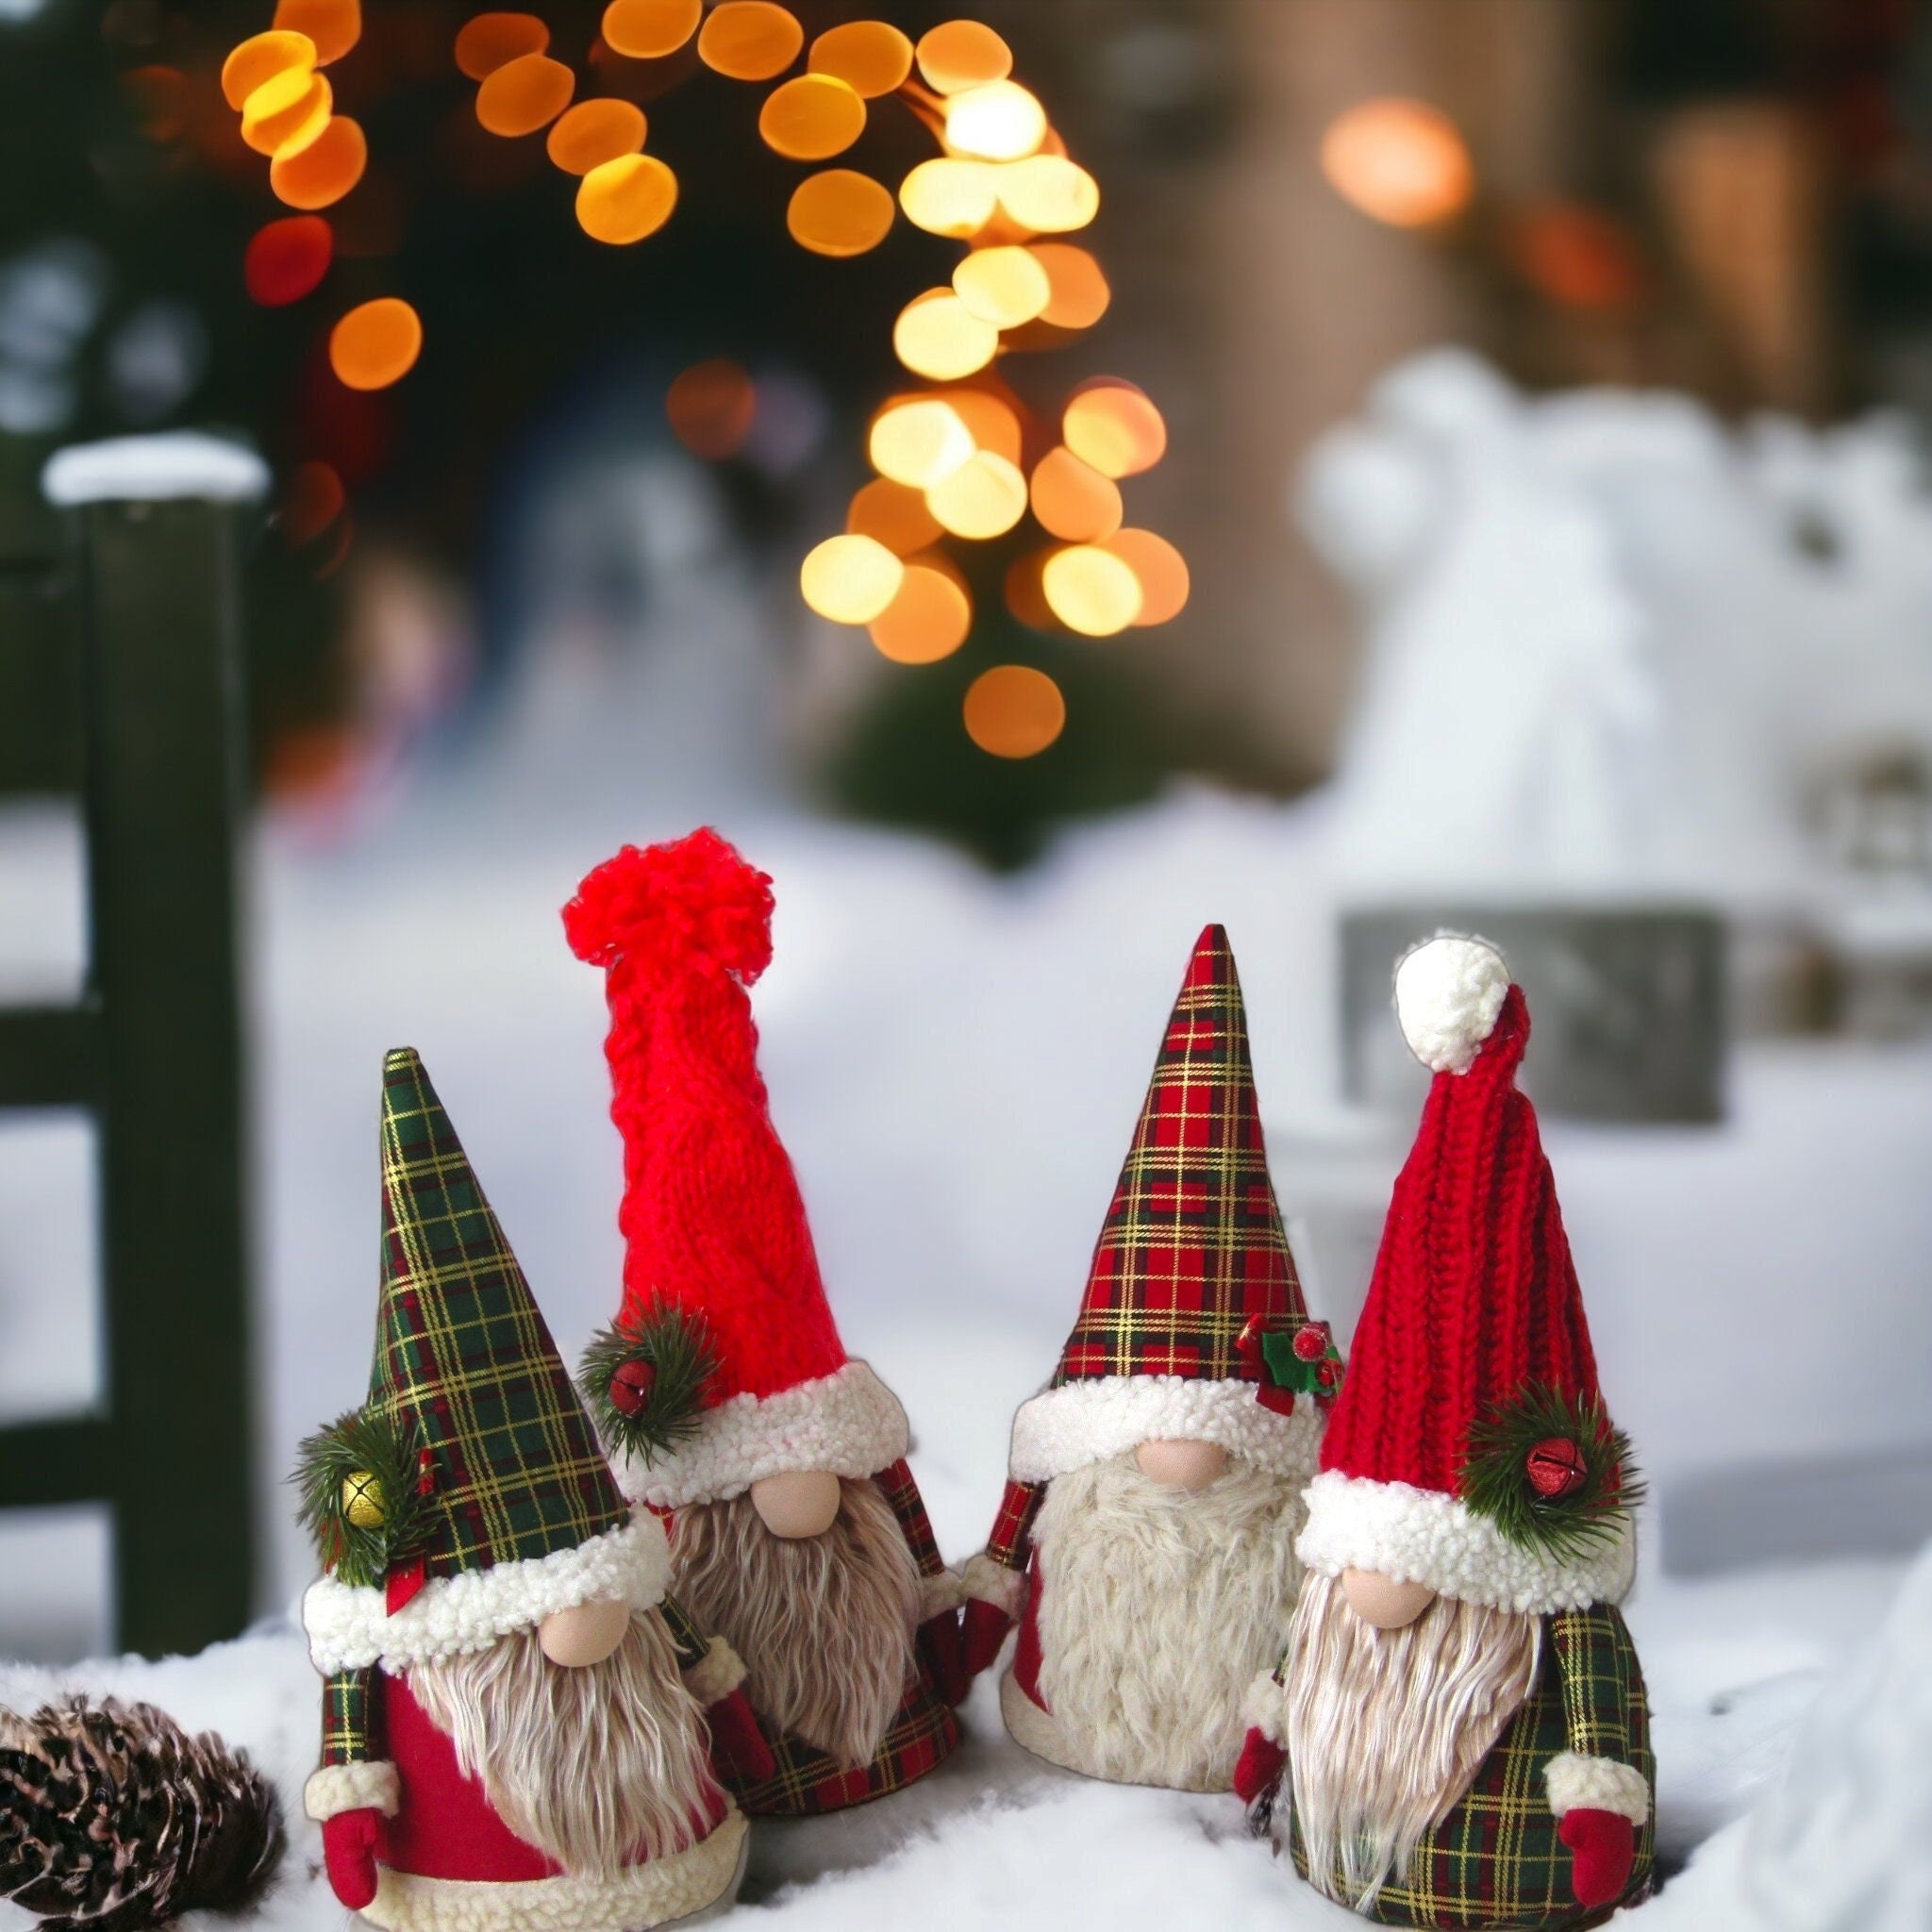 Sunisery Christmas Gift Bags, Cute 3D Santa Snowman Elk Bear Party Favor  Apple Bags for Home, Office 